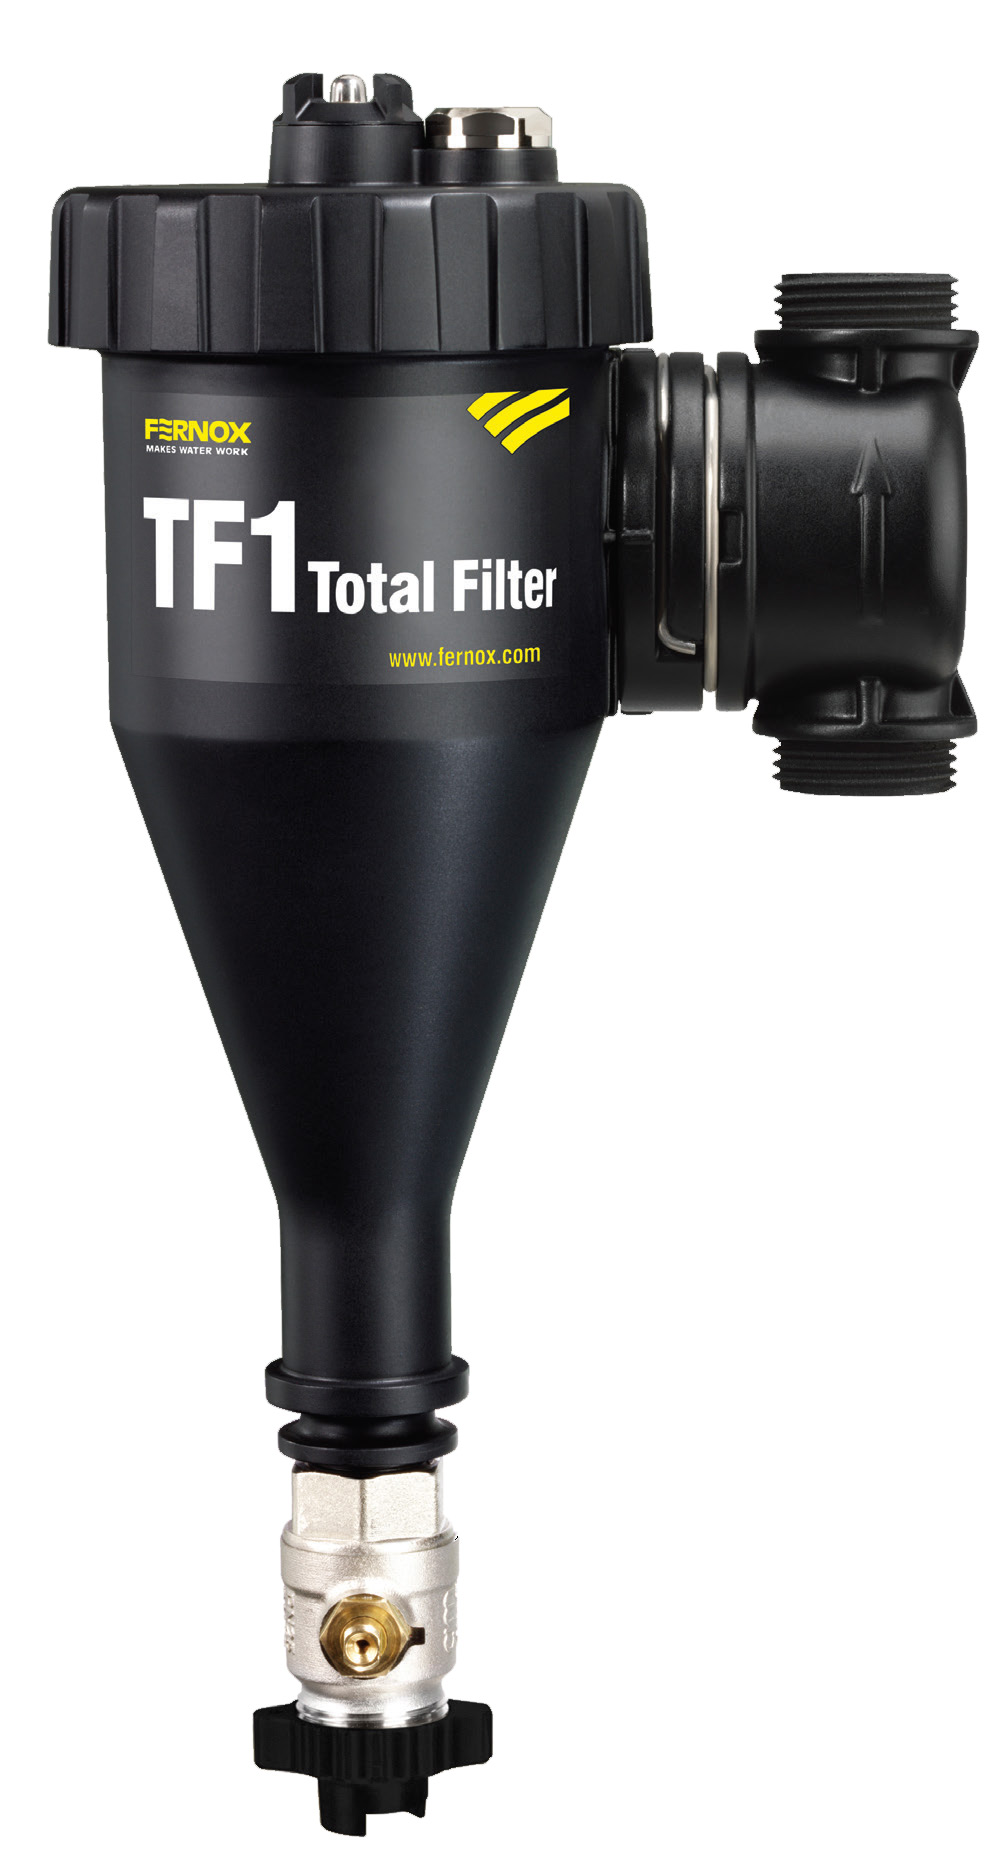 Fernox TF-1 Total Filter